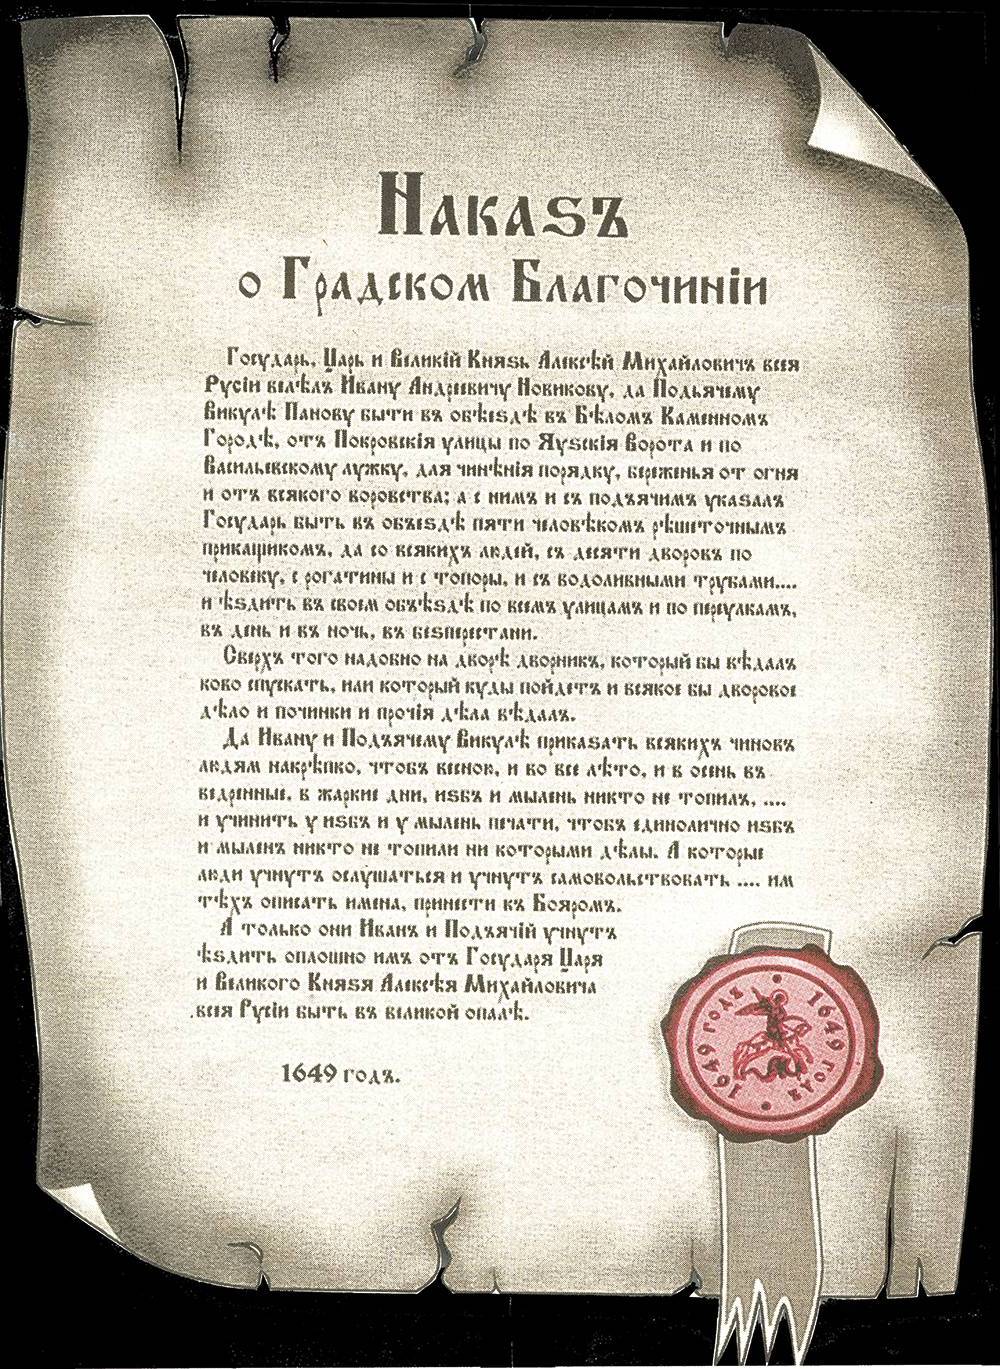 30 апреля 1649 года. Указ о Градском благочинии 1649. Наказ о Градском благочинии 1649 года. Наказ о Градском благочинии 1649 года царя Алексея Михайловича.